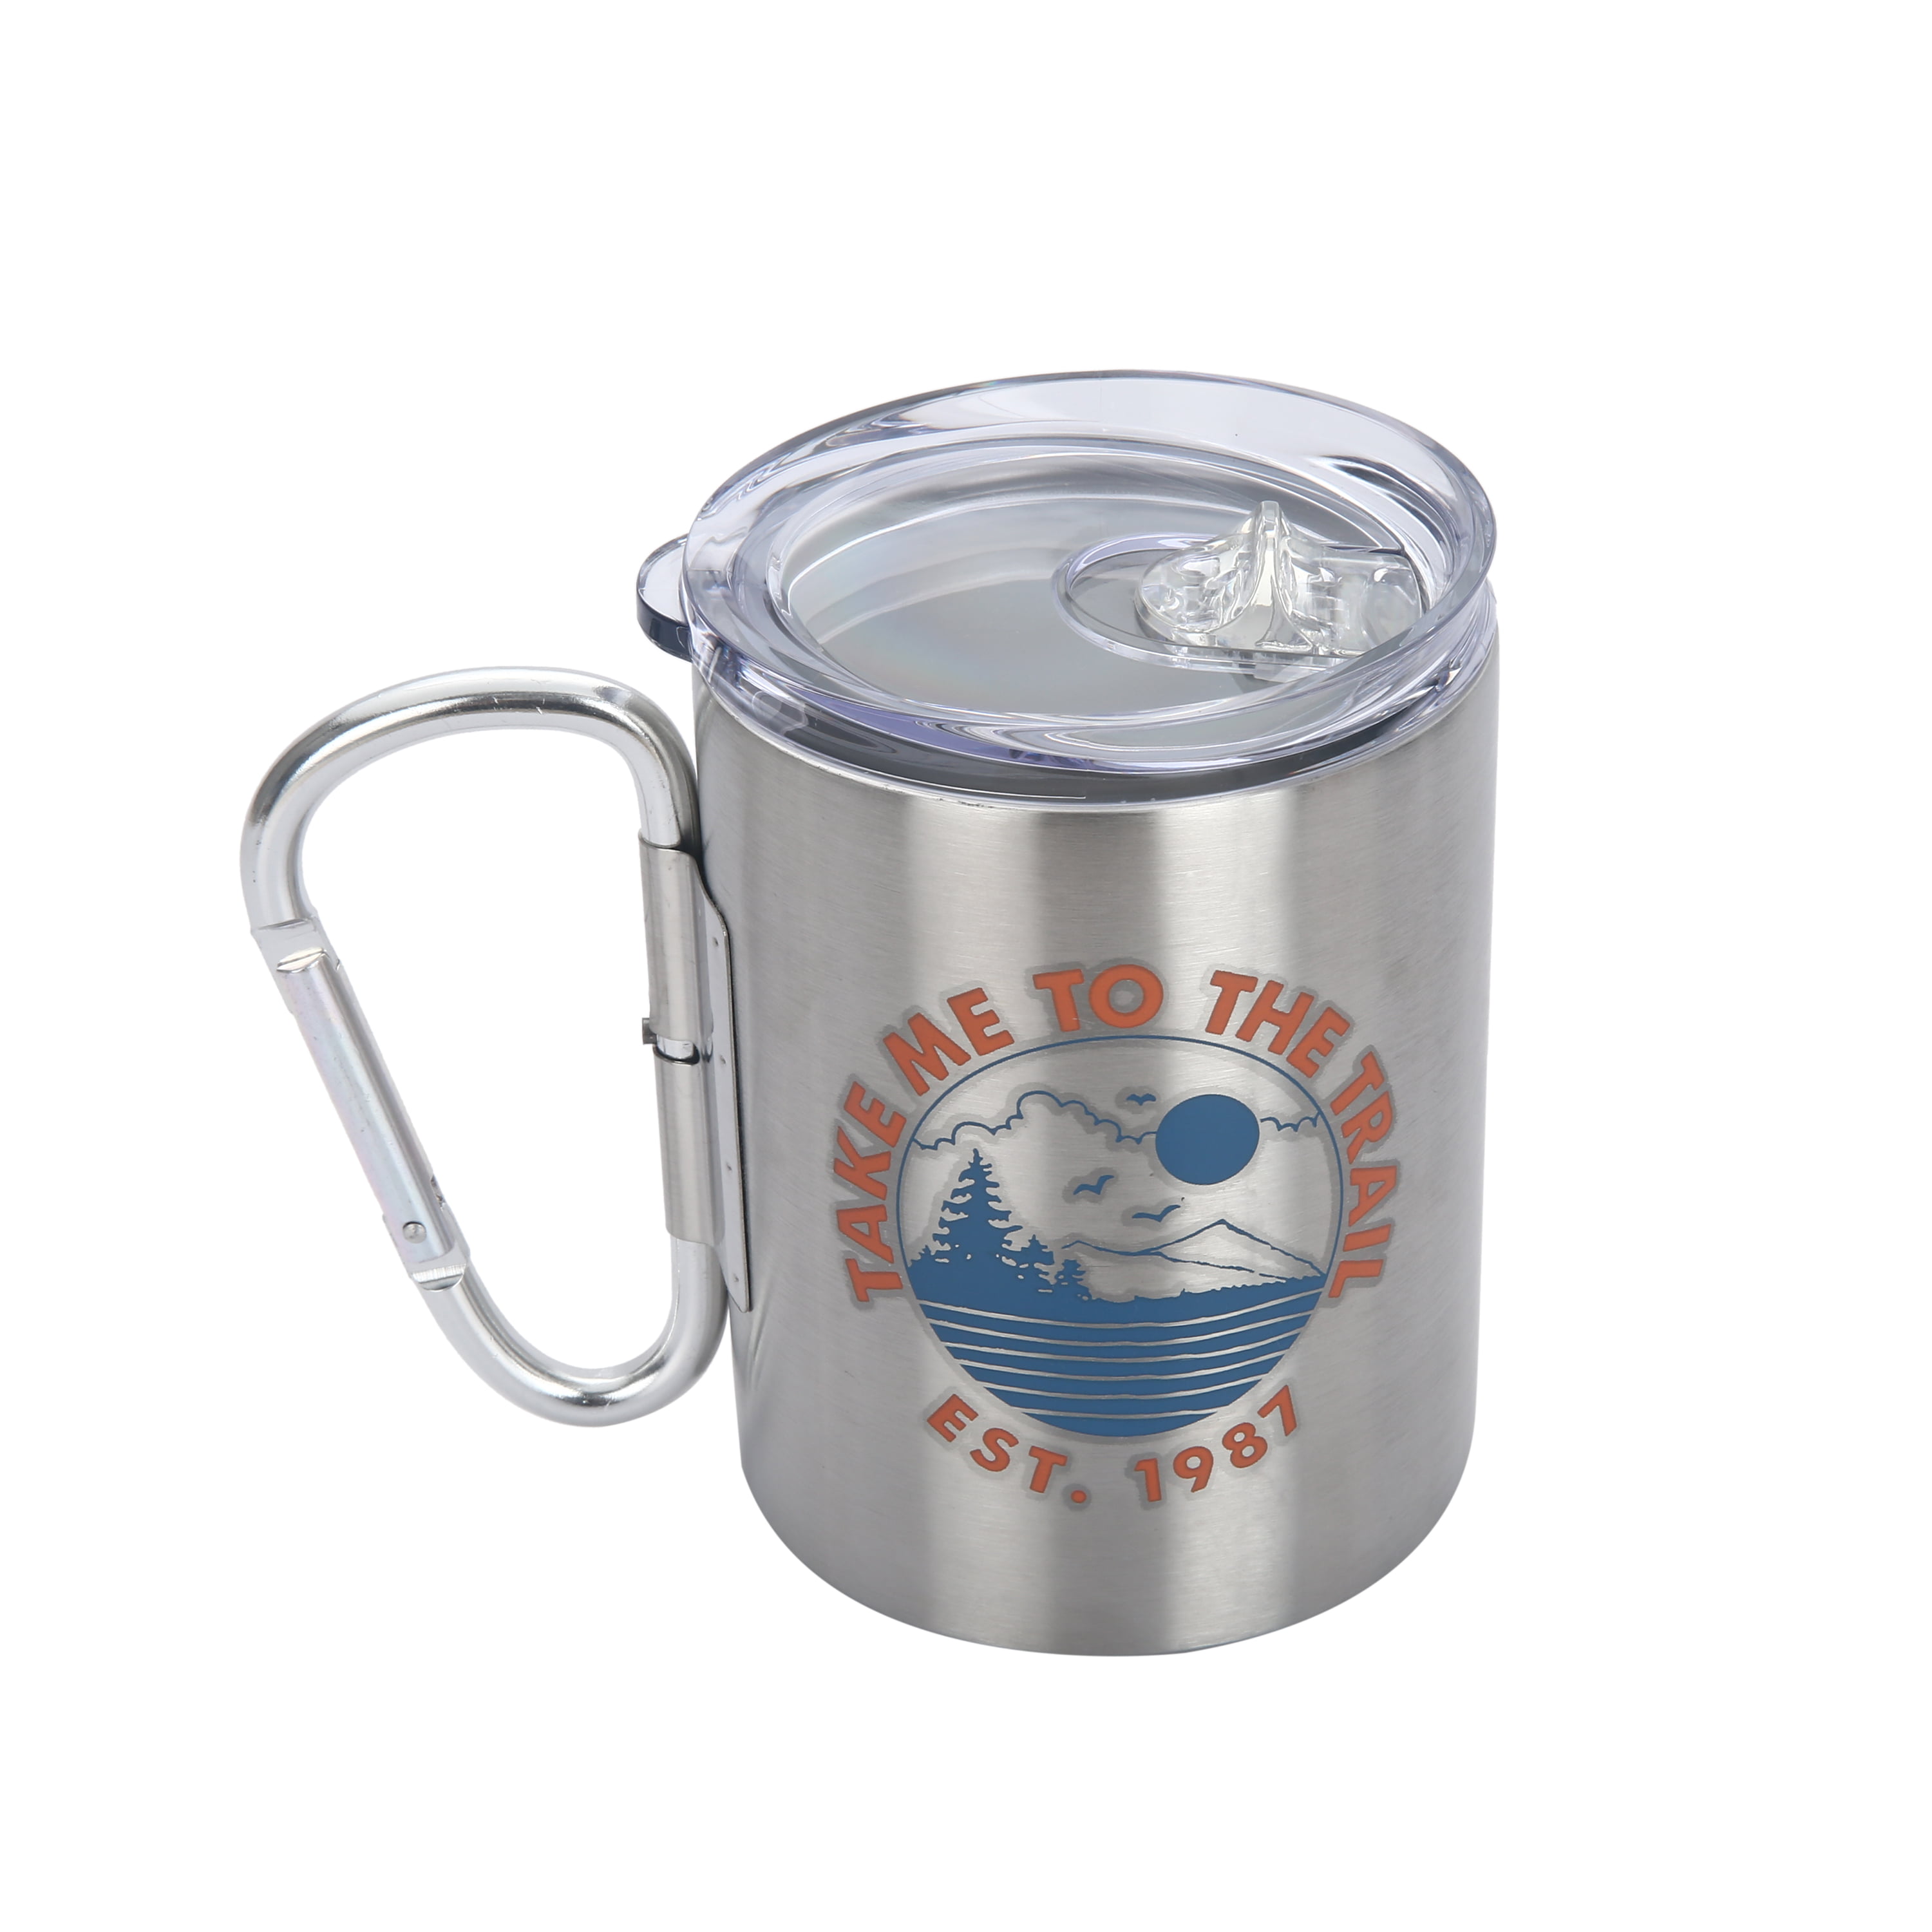 10oz Carabiner Mug – The Stainless Depot